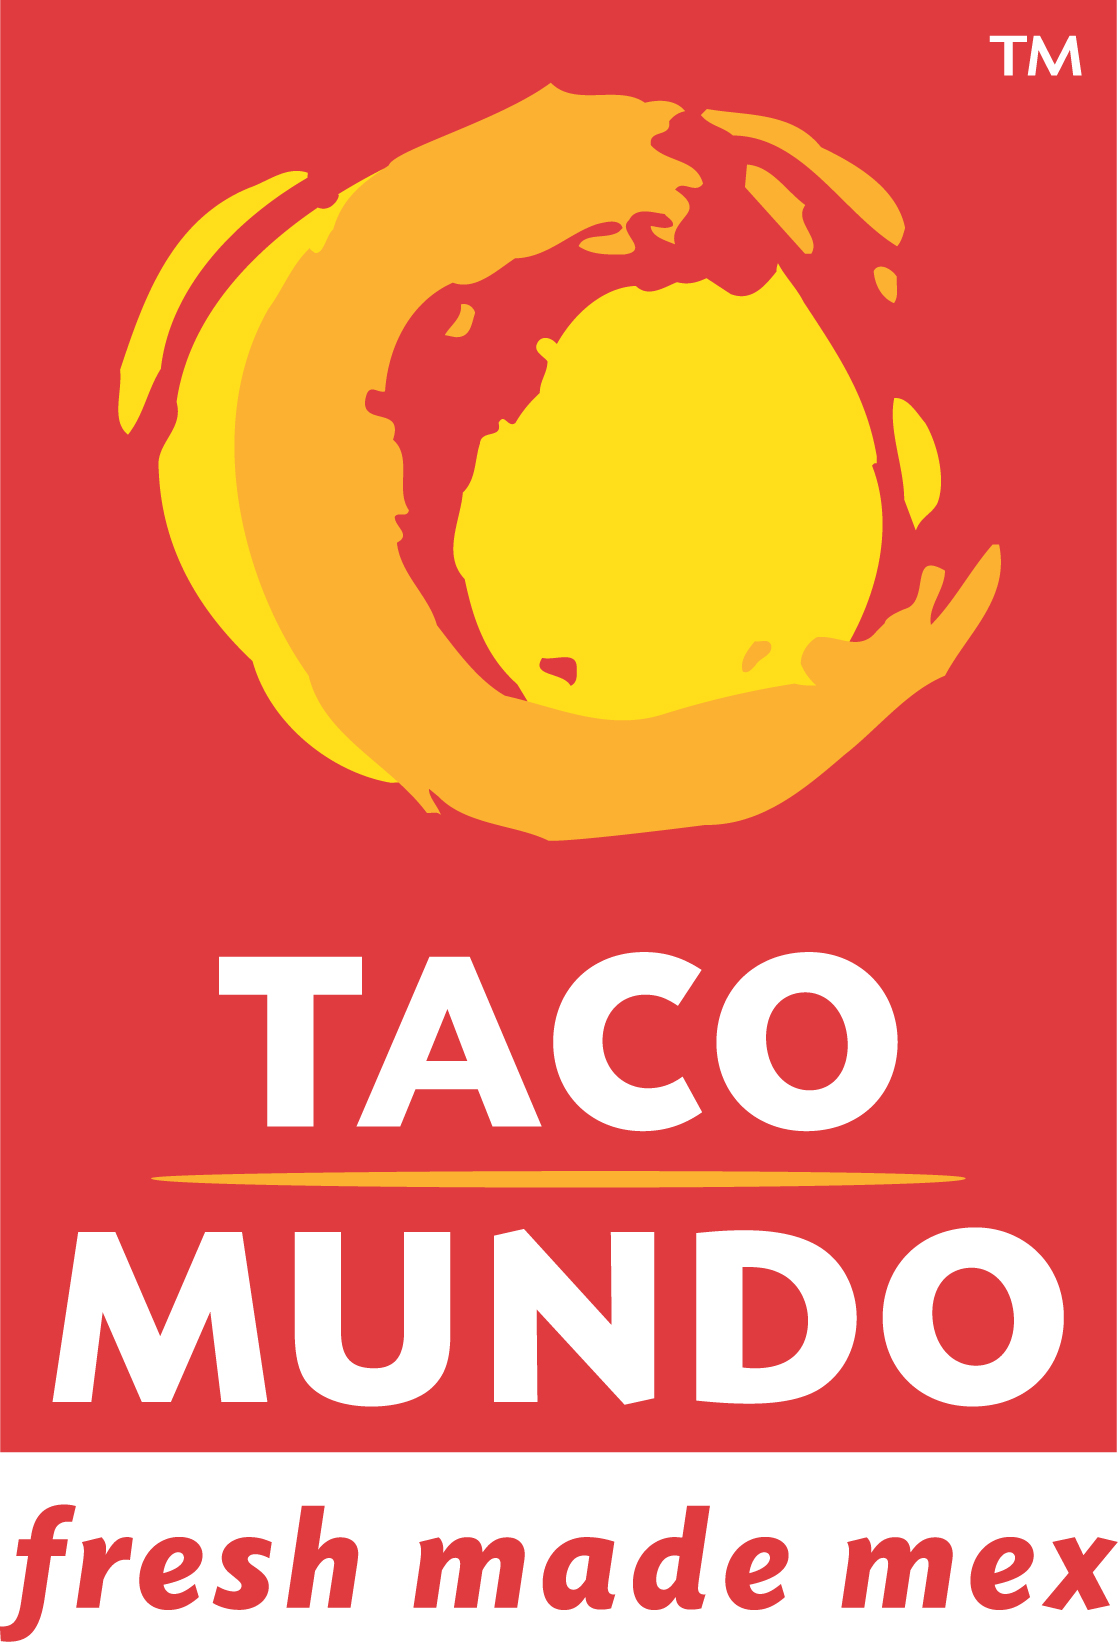 Taco Mundo